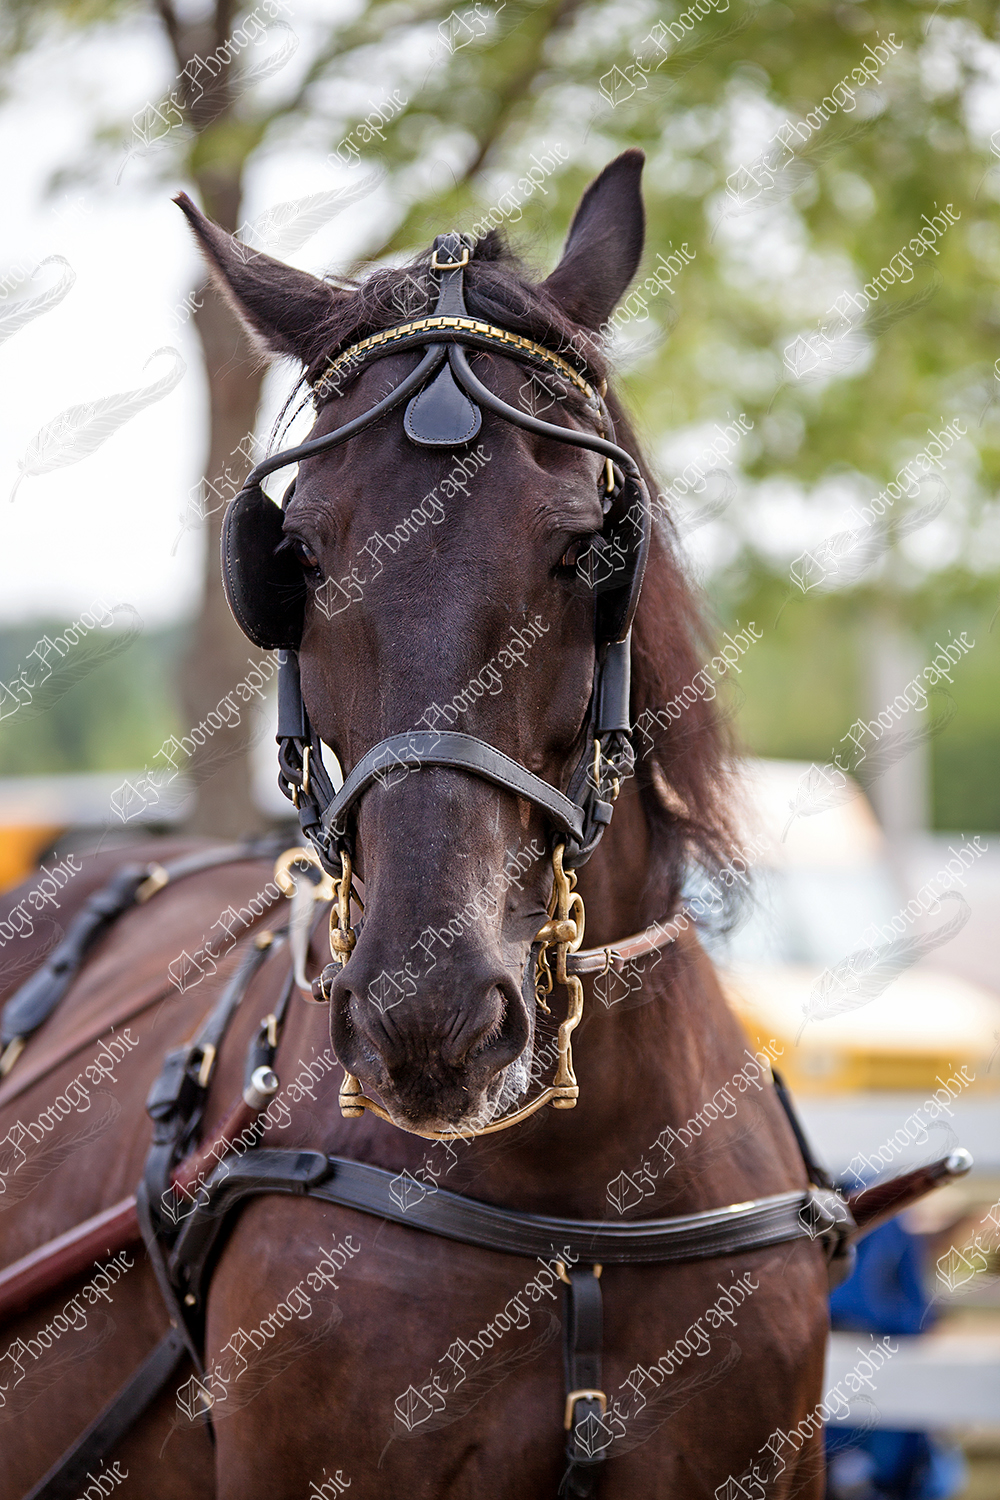 elze_photo_6486_cheval_canadien_race_horse_harness